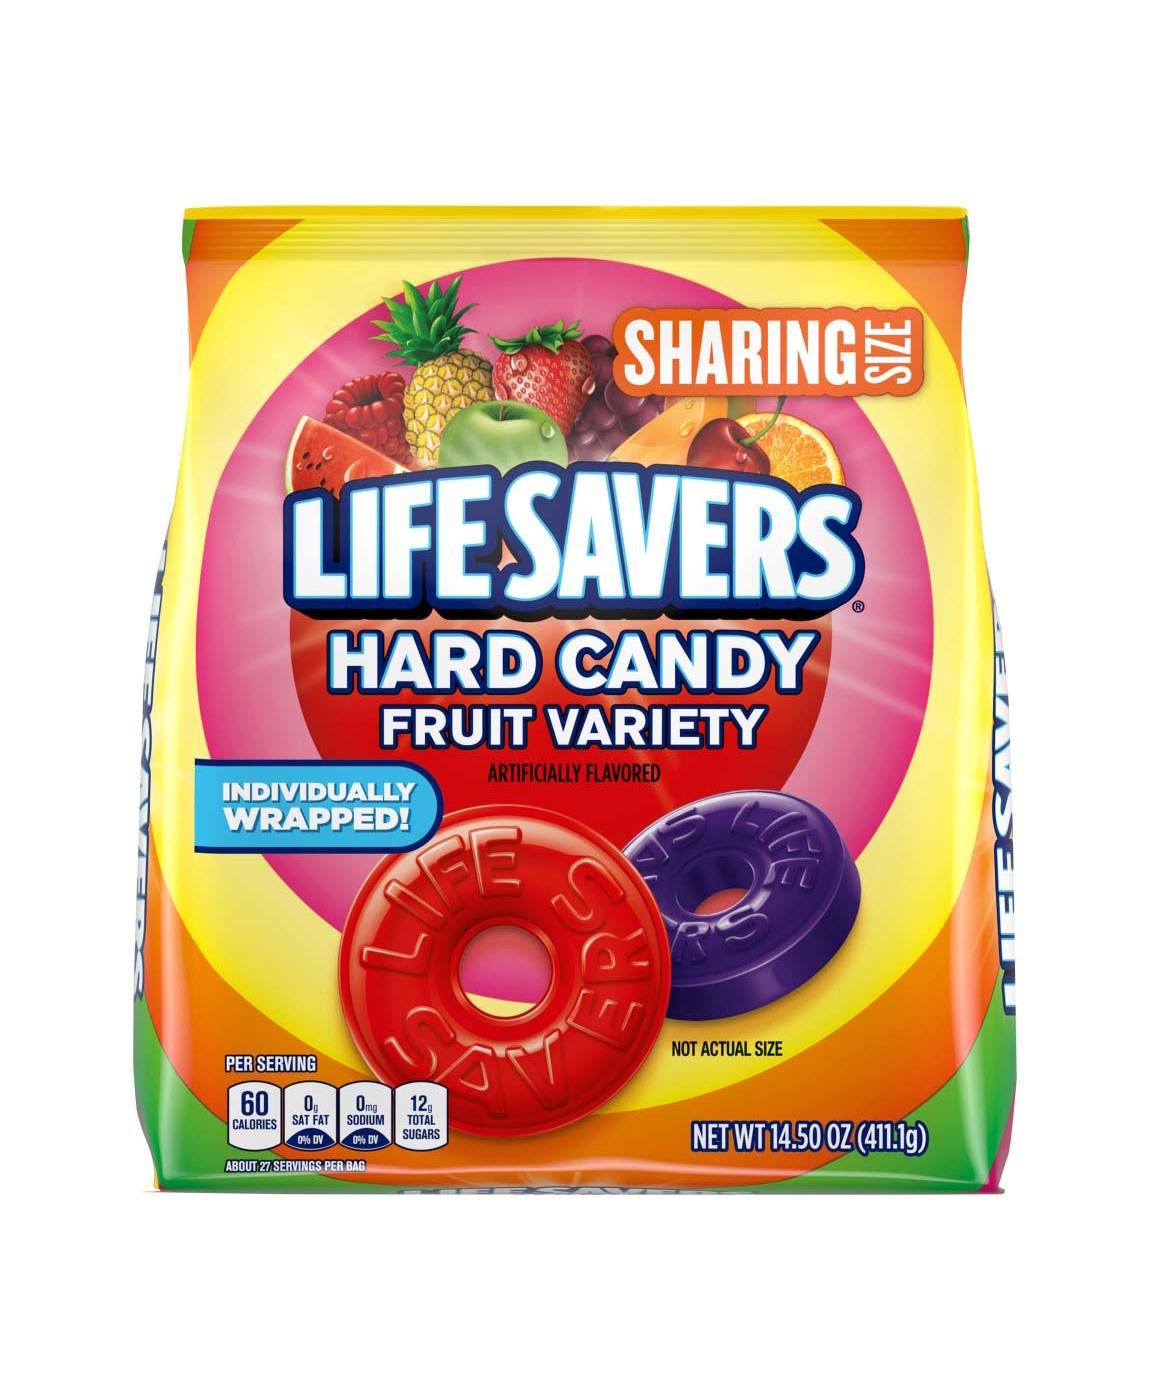 Life Savers Hard Candy Fruit Variety Sharing Size; image 1 of 8